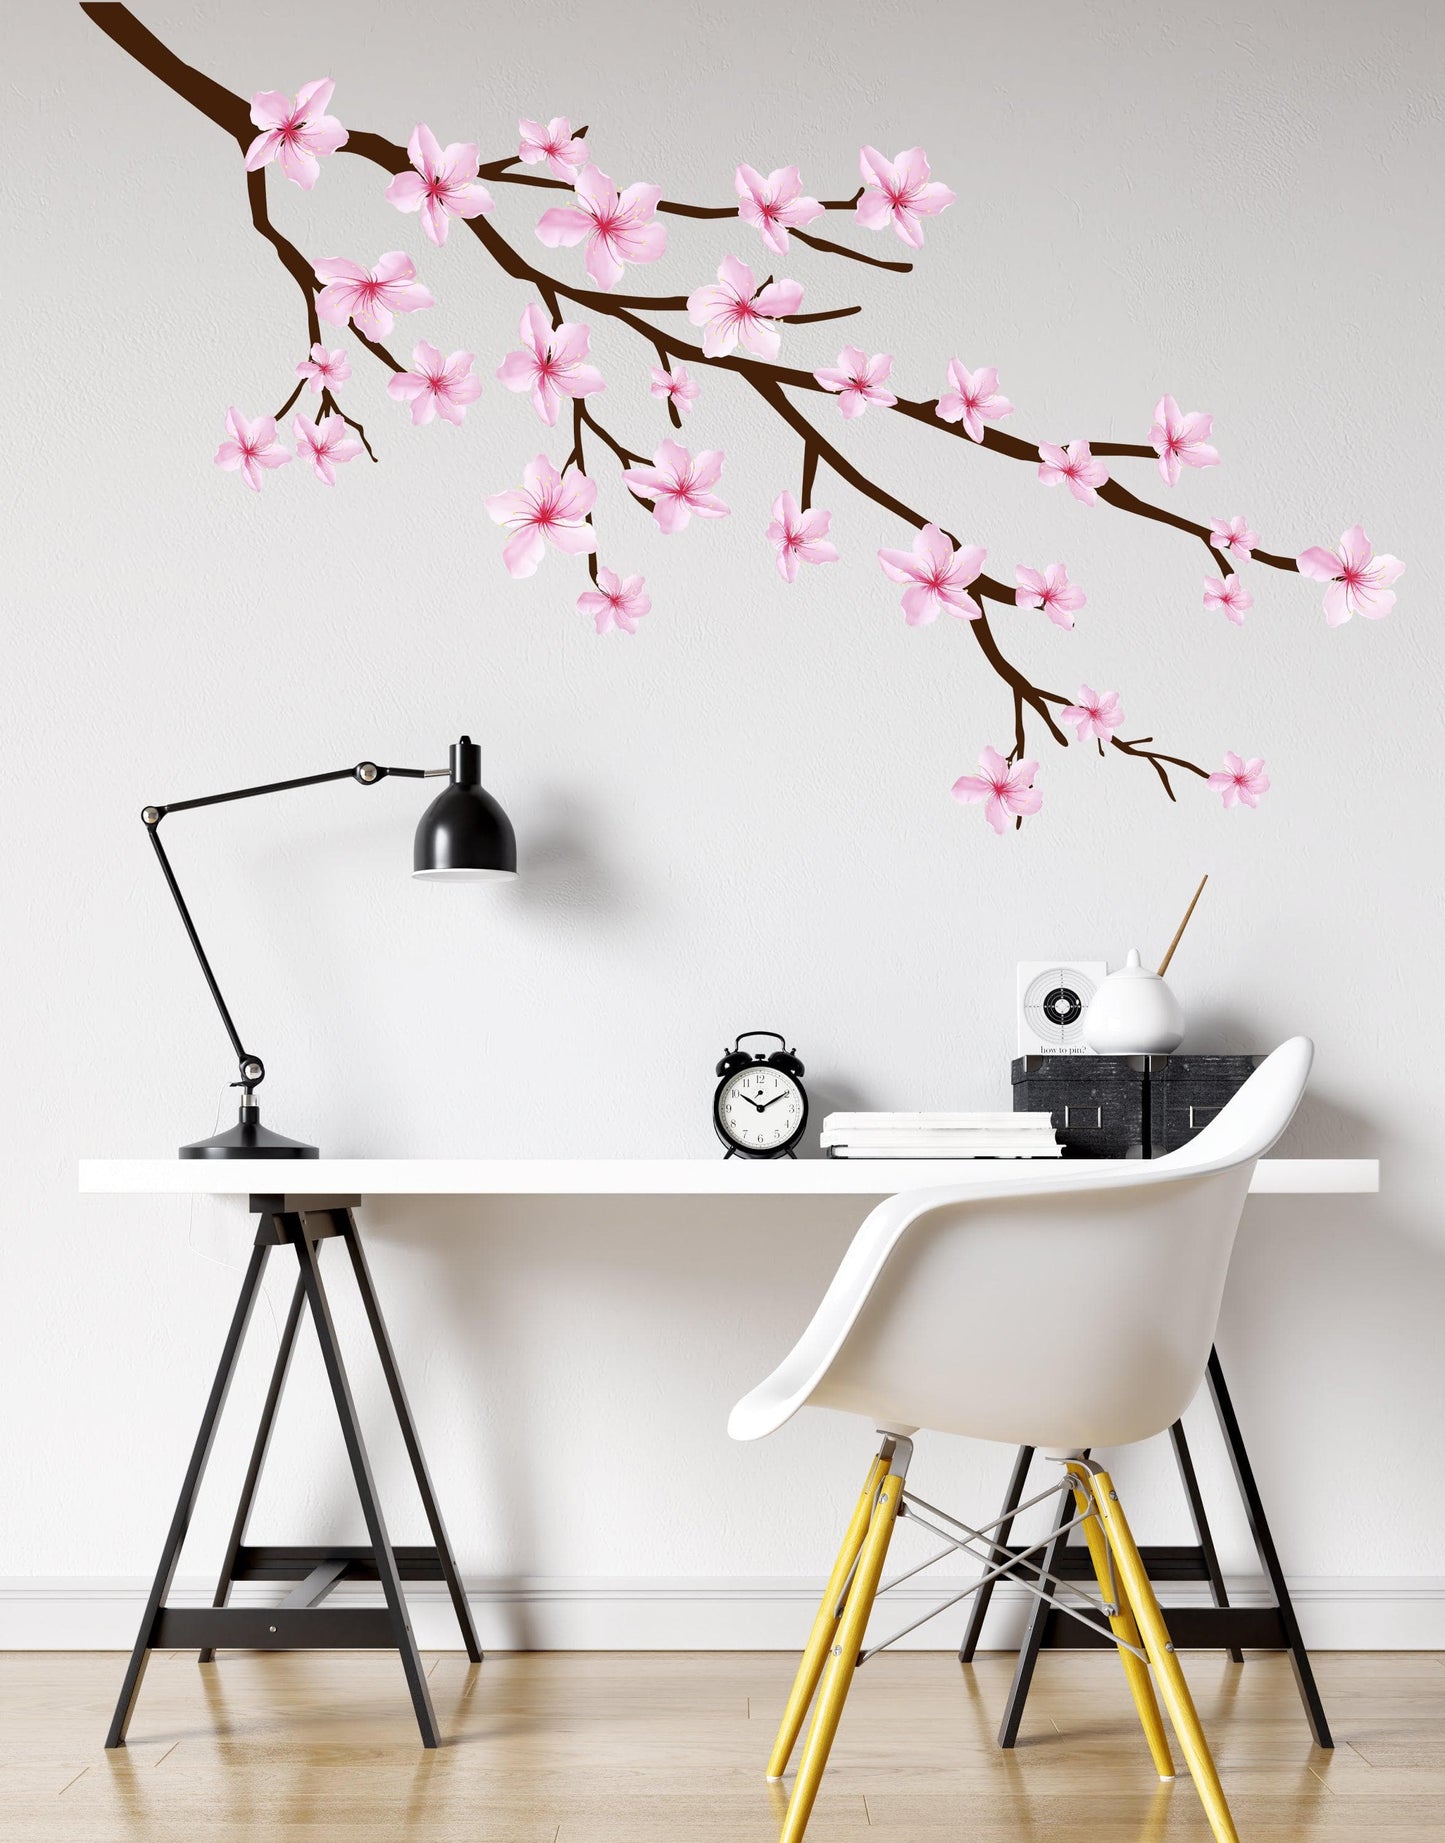 Cherry Blossom Branch Graphic Wall Decal Sticker. Pink Sakura Branches. #6207